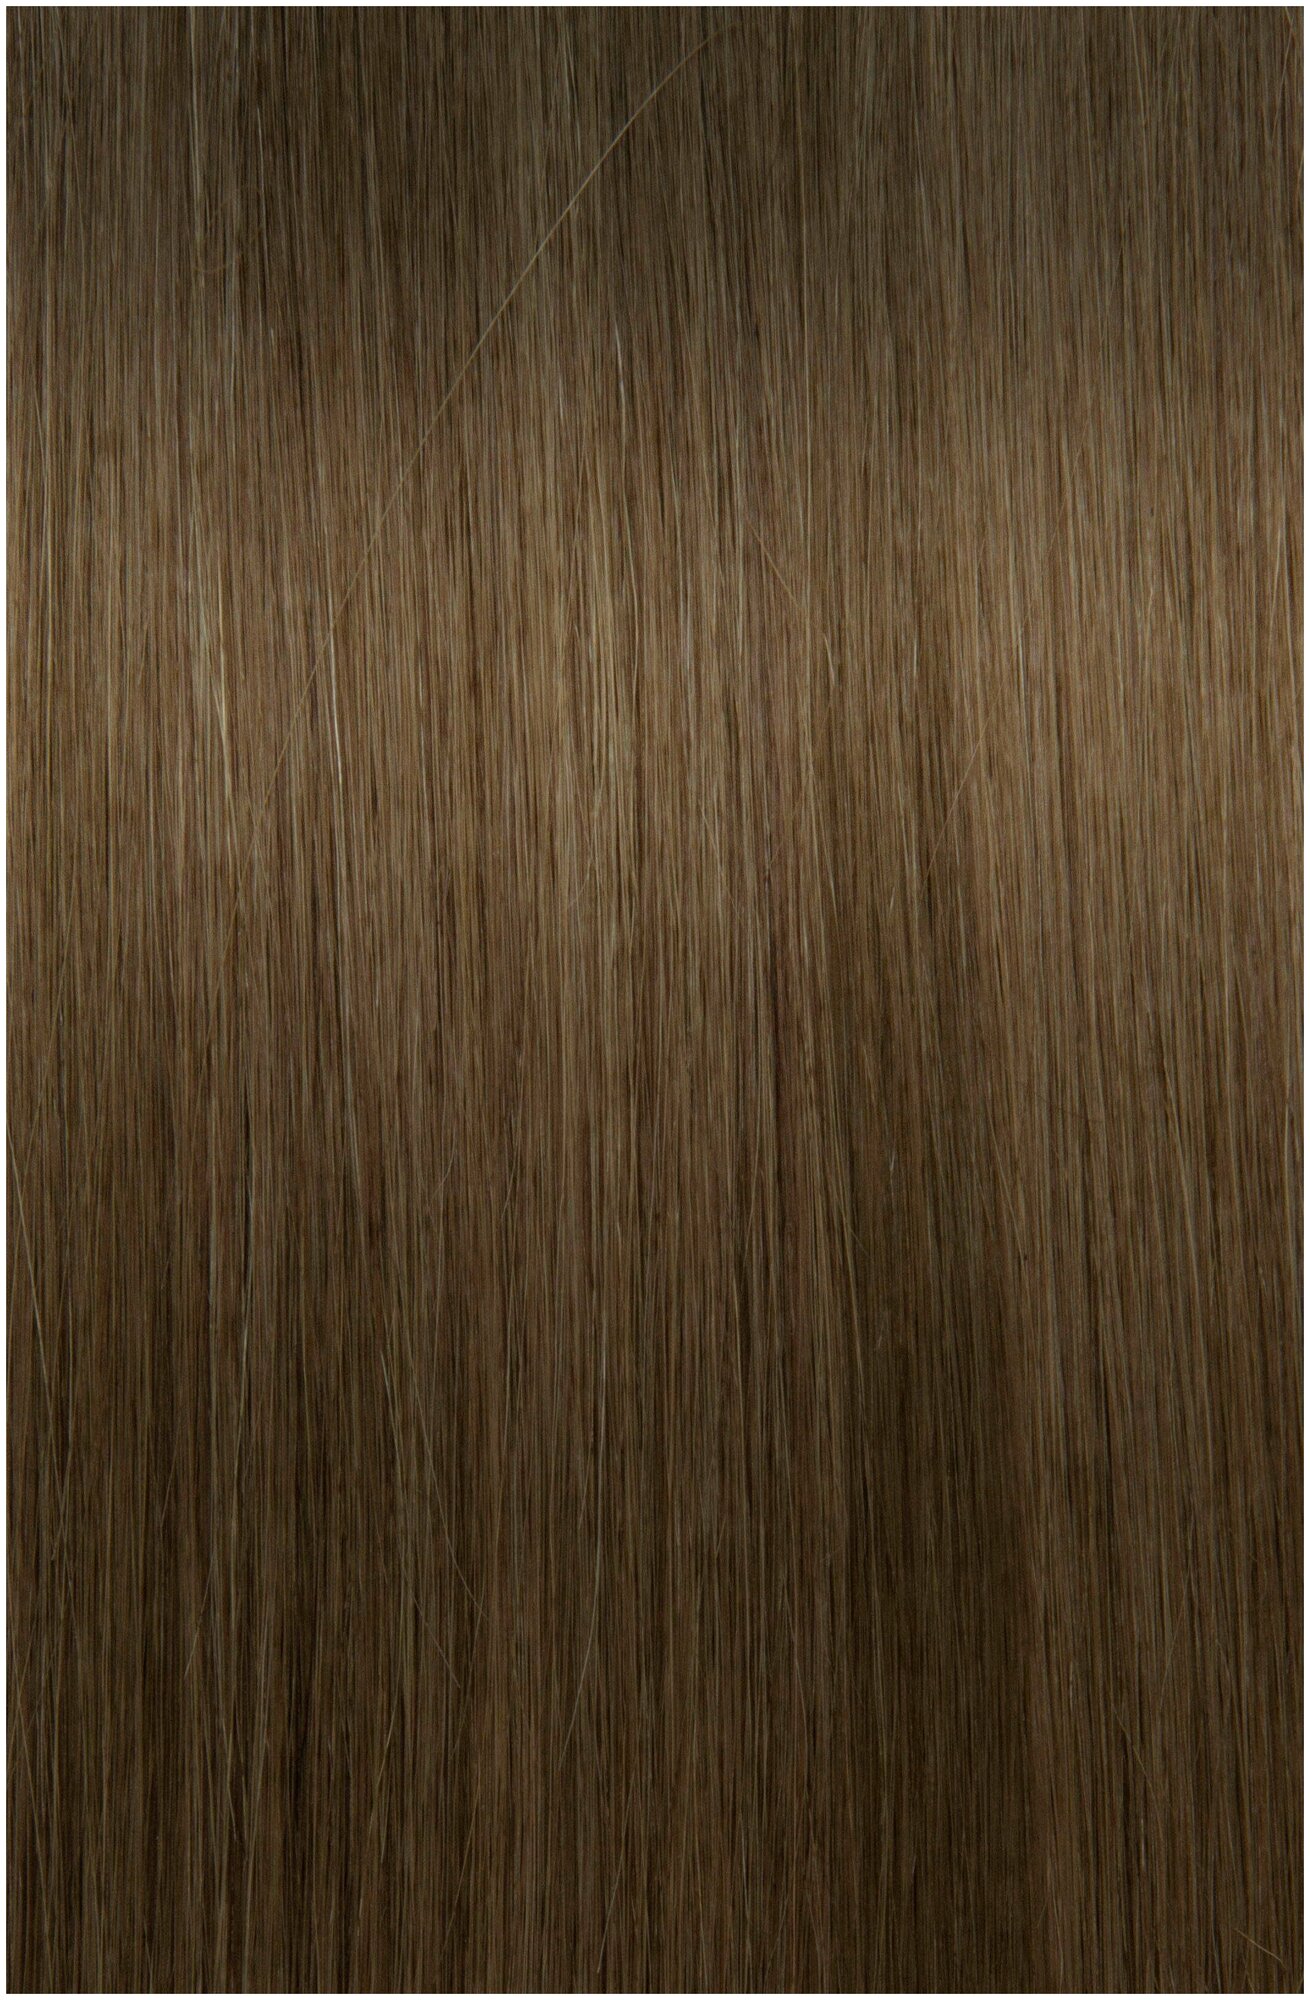 Hairshop Волосы для наращивания 6.0 (6) 60см BERKANA ШП (20 капсул) (Темно-русый)